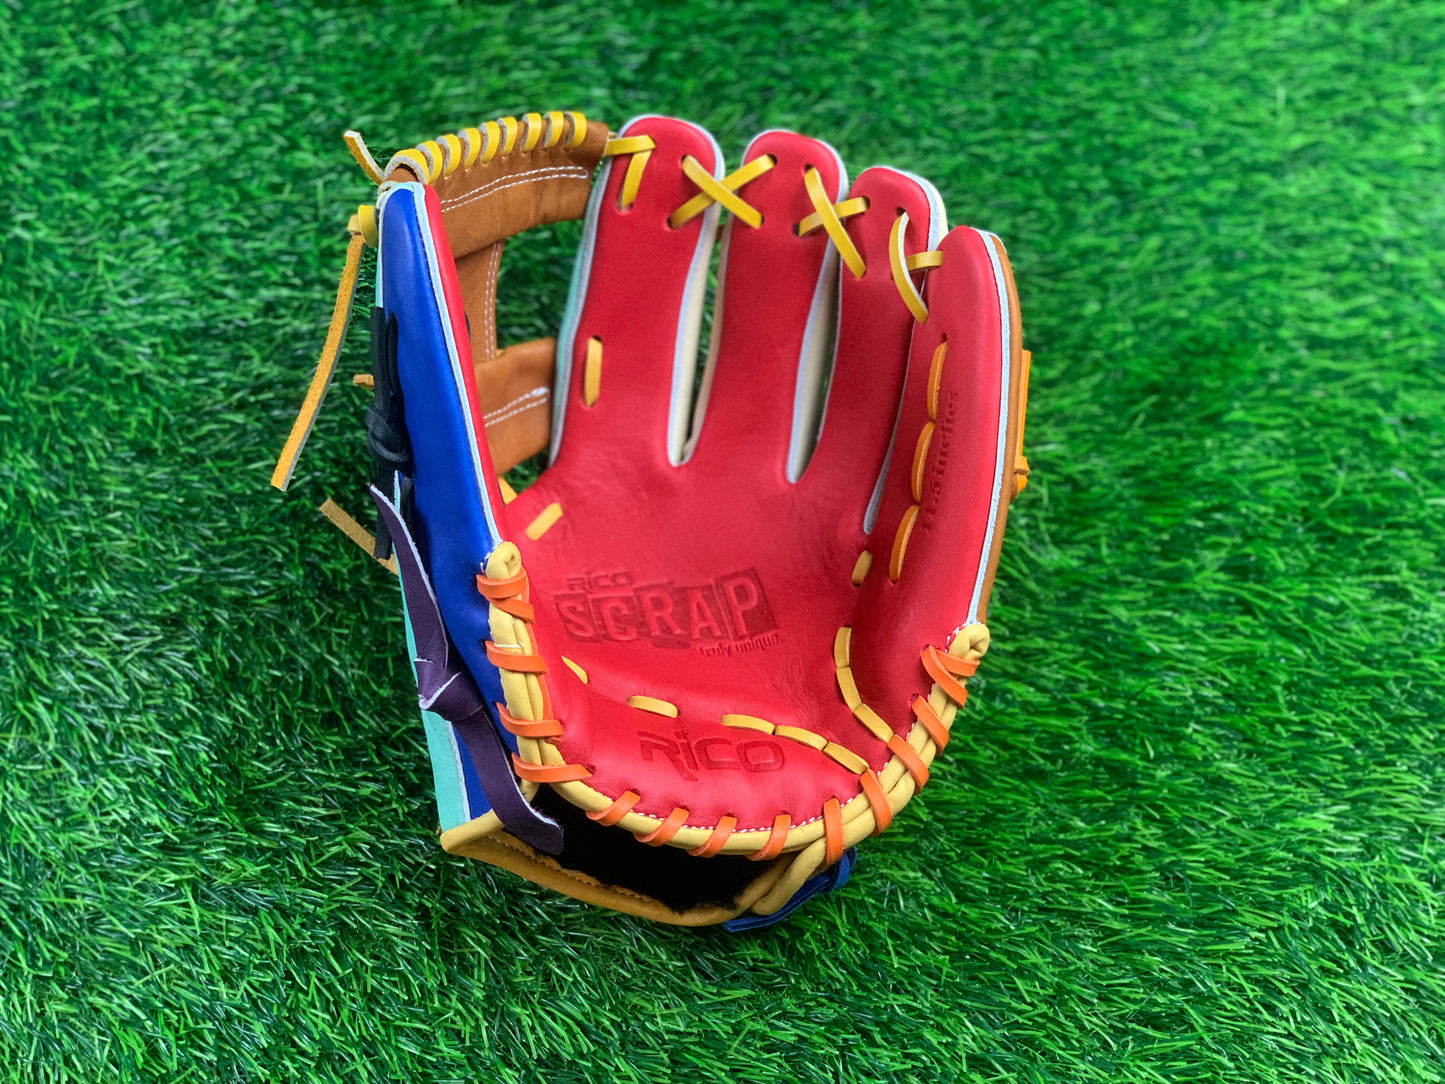 11.5 inch Scrap glove, right hand thrower, i web, multi-color.